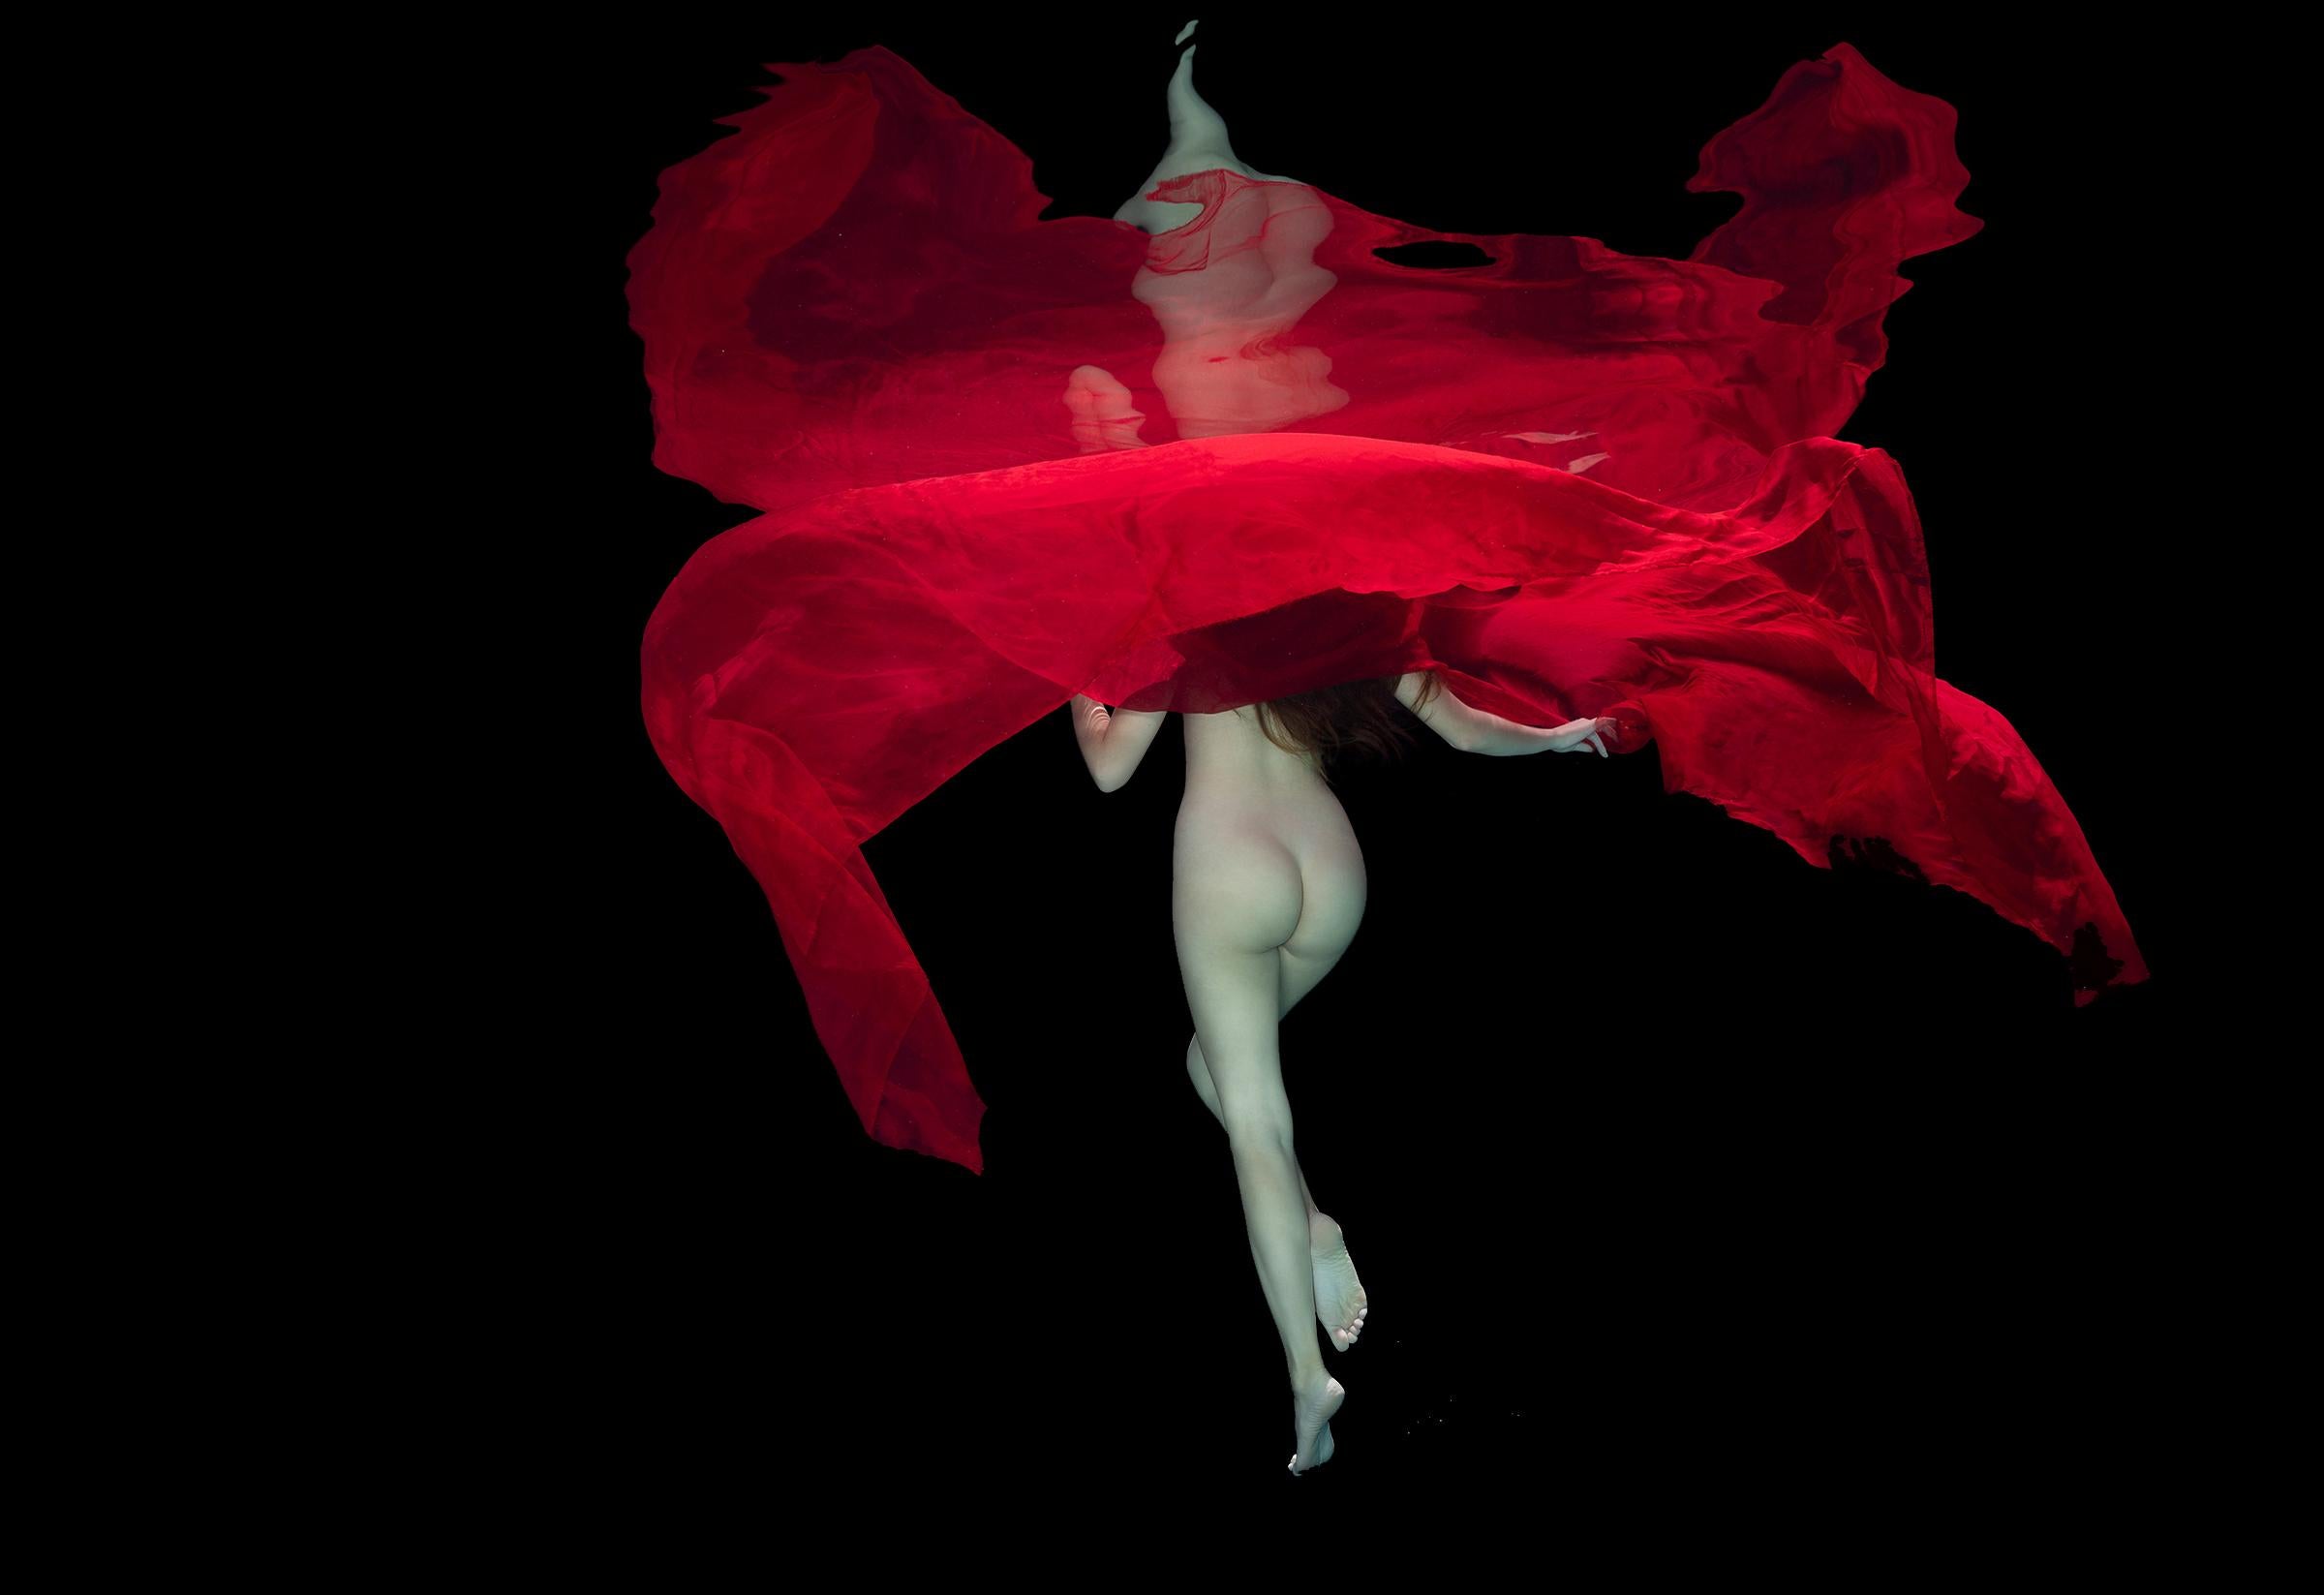 Alex Sher Figurative Photograph - Hibiscus - underwater nude photograph - archival pigment print 24" x 36"